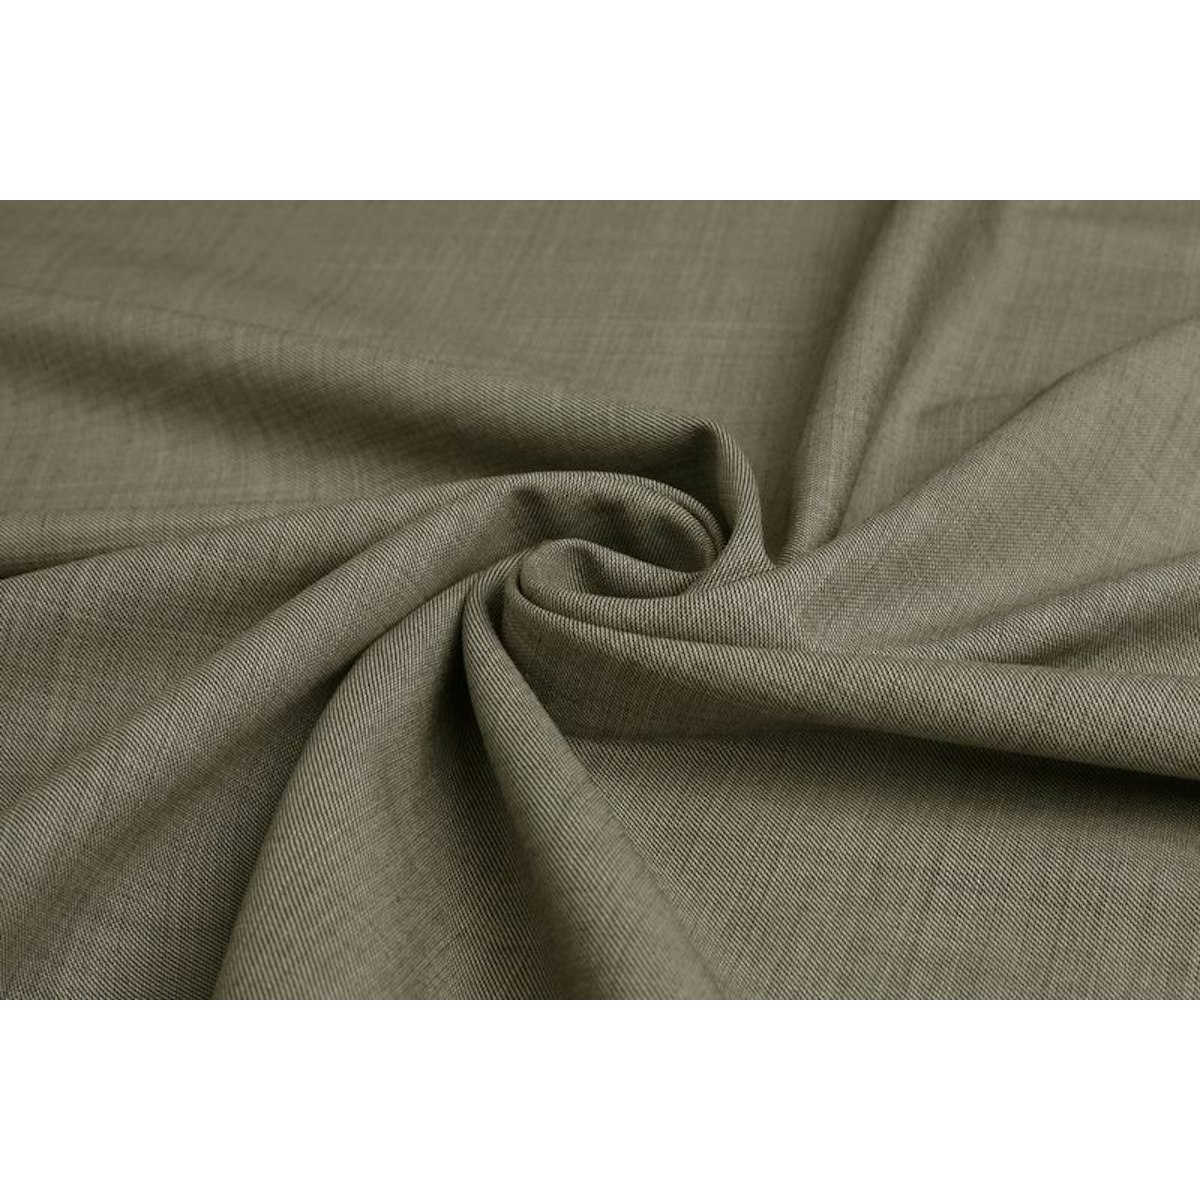 InStitchu Suit Fabric 31